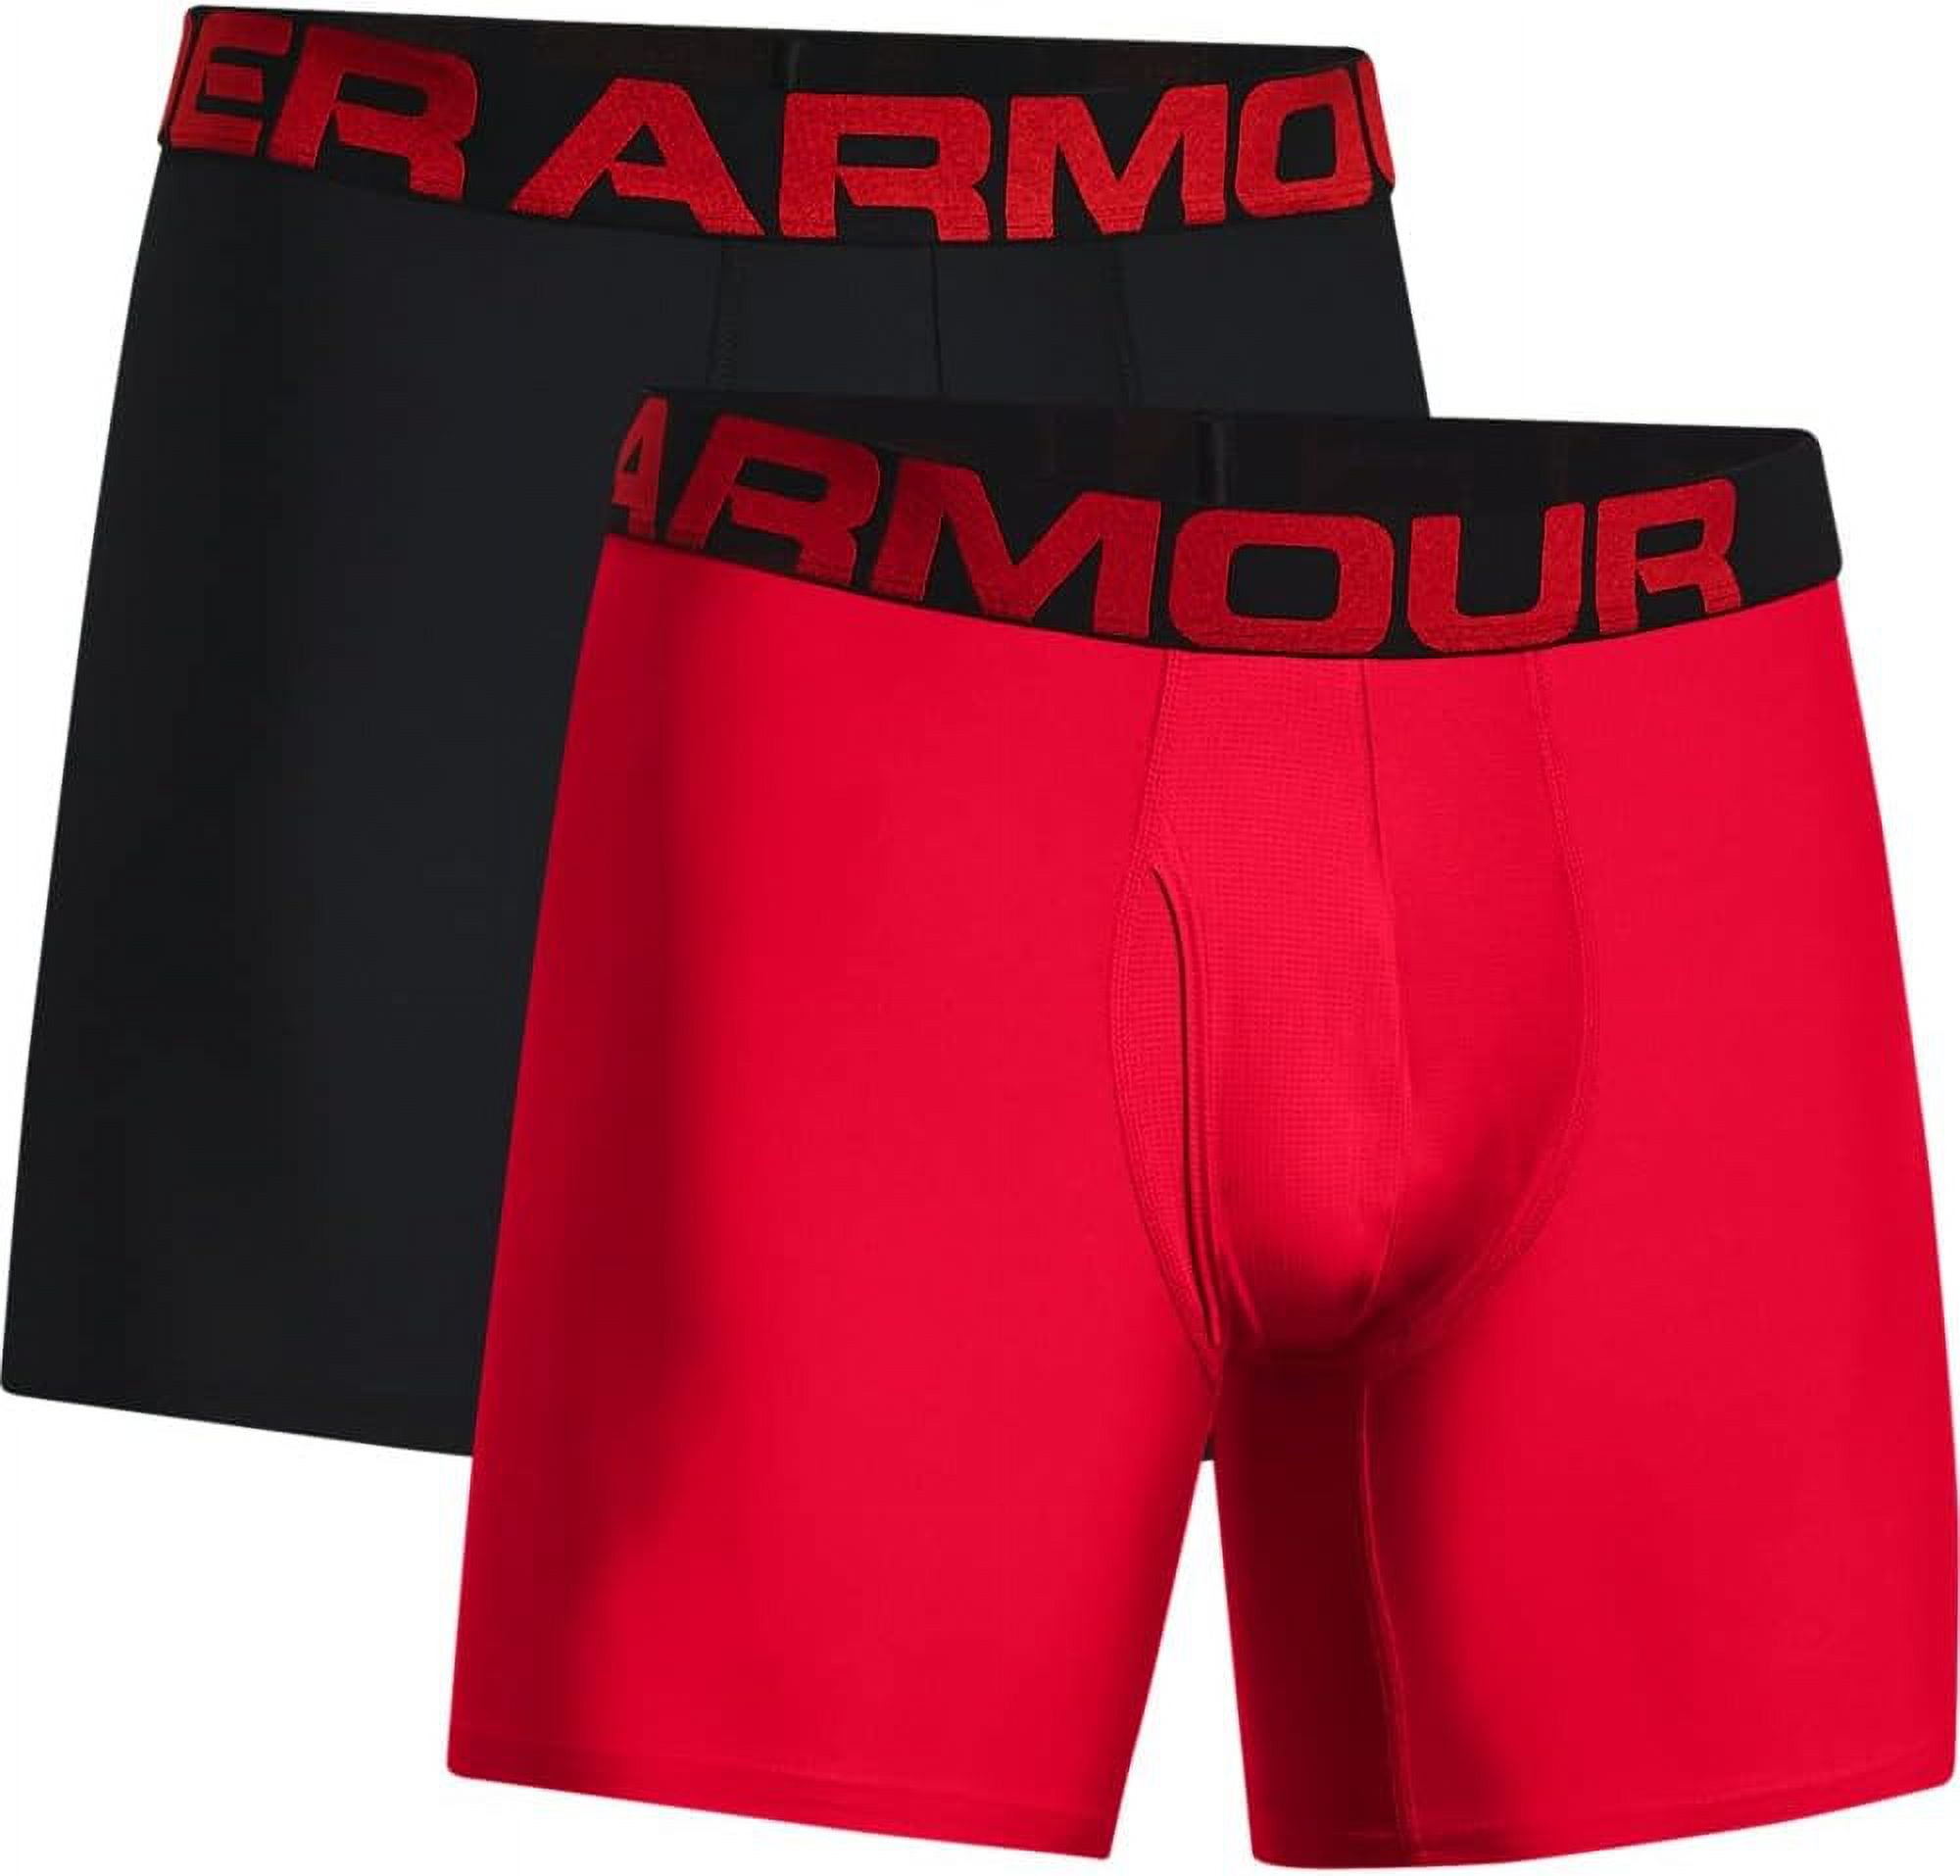 Under Armour 1363619 Size XL Men's Underwear - Black (2 Pack) for sale  online